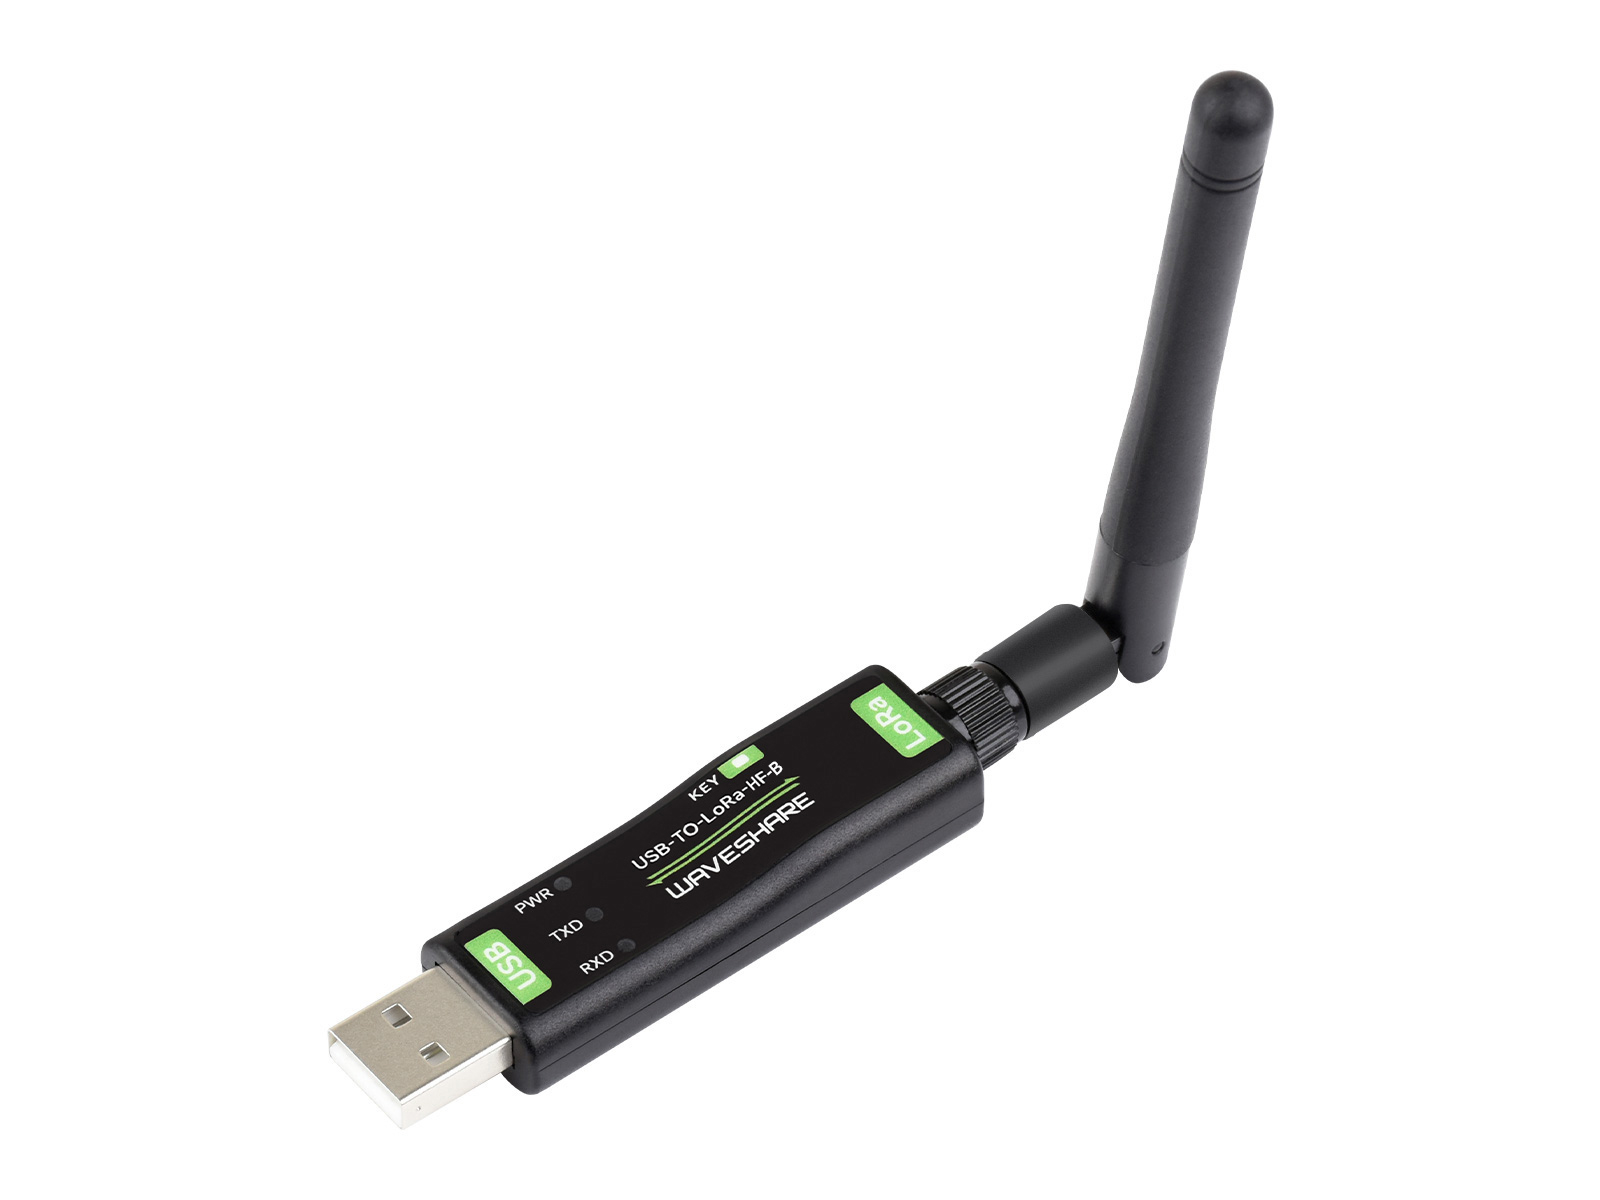 USB转LoRa数传模块 基于SX1262方案 无线数传终端 工业农业数据采集 适用于HF频段